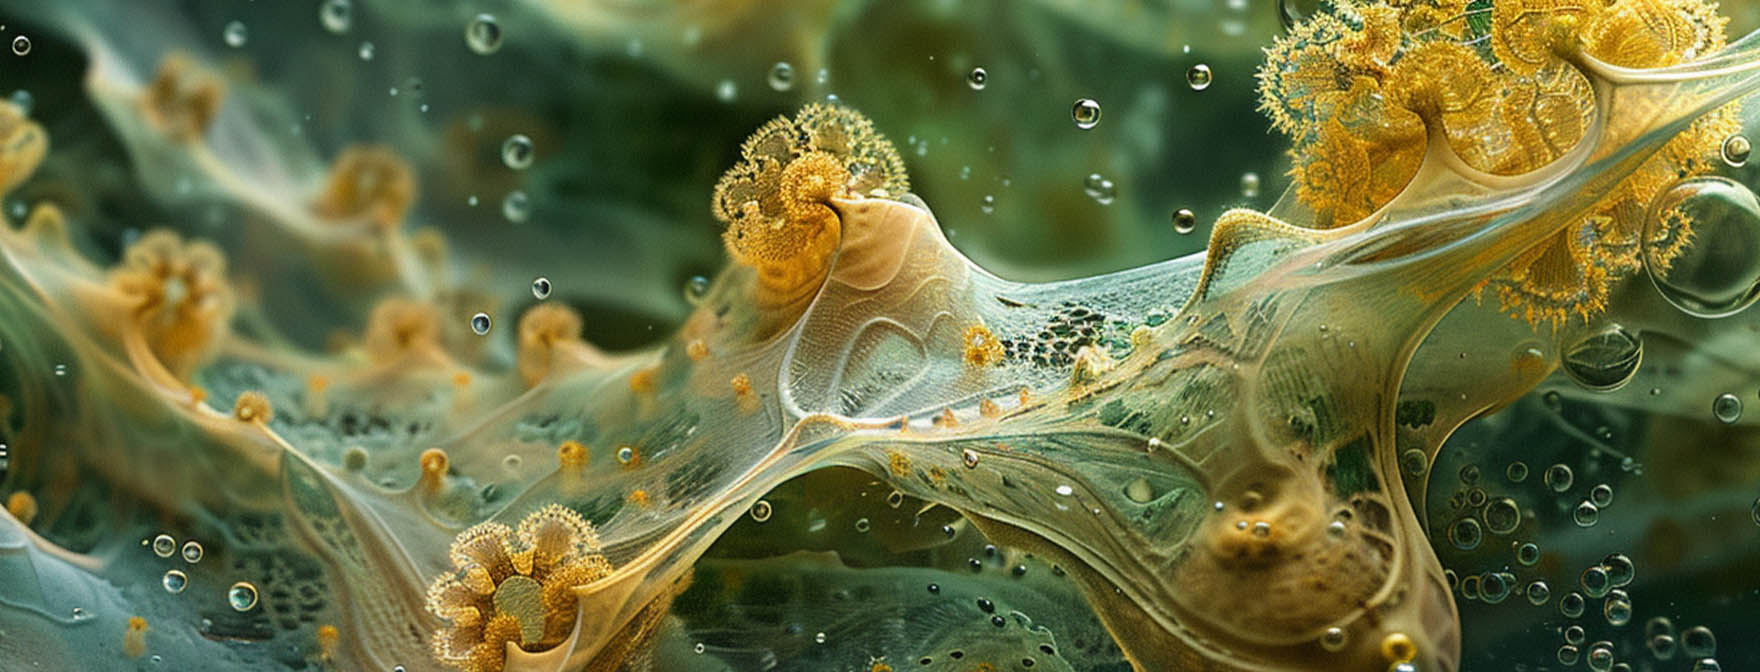 mikroskopisk bild på alger genererad av AI